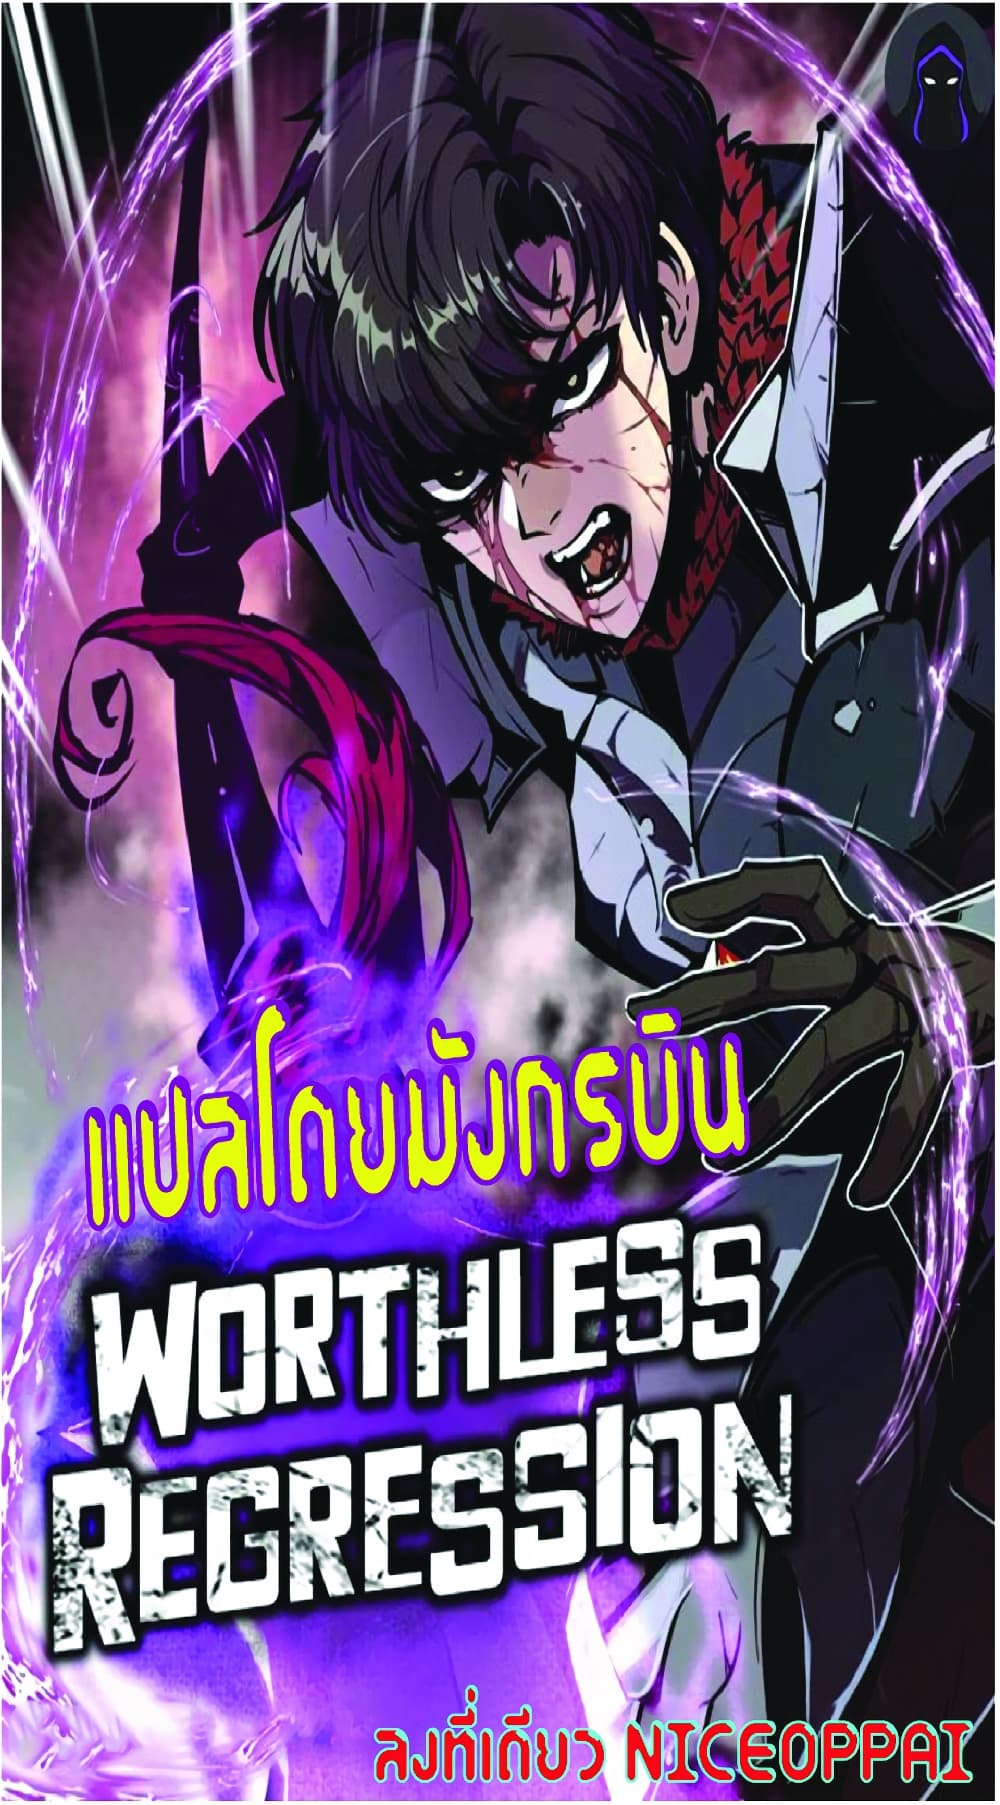 Worthless Regression22 01